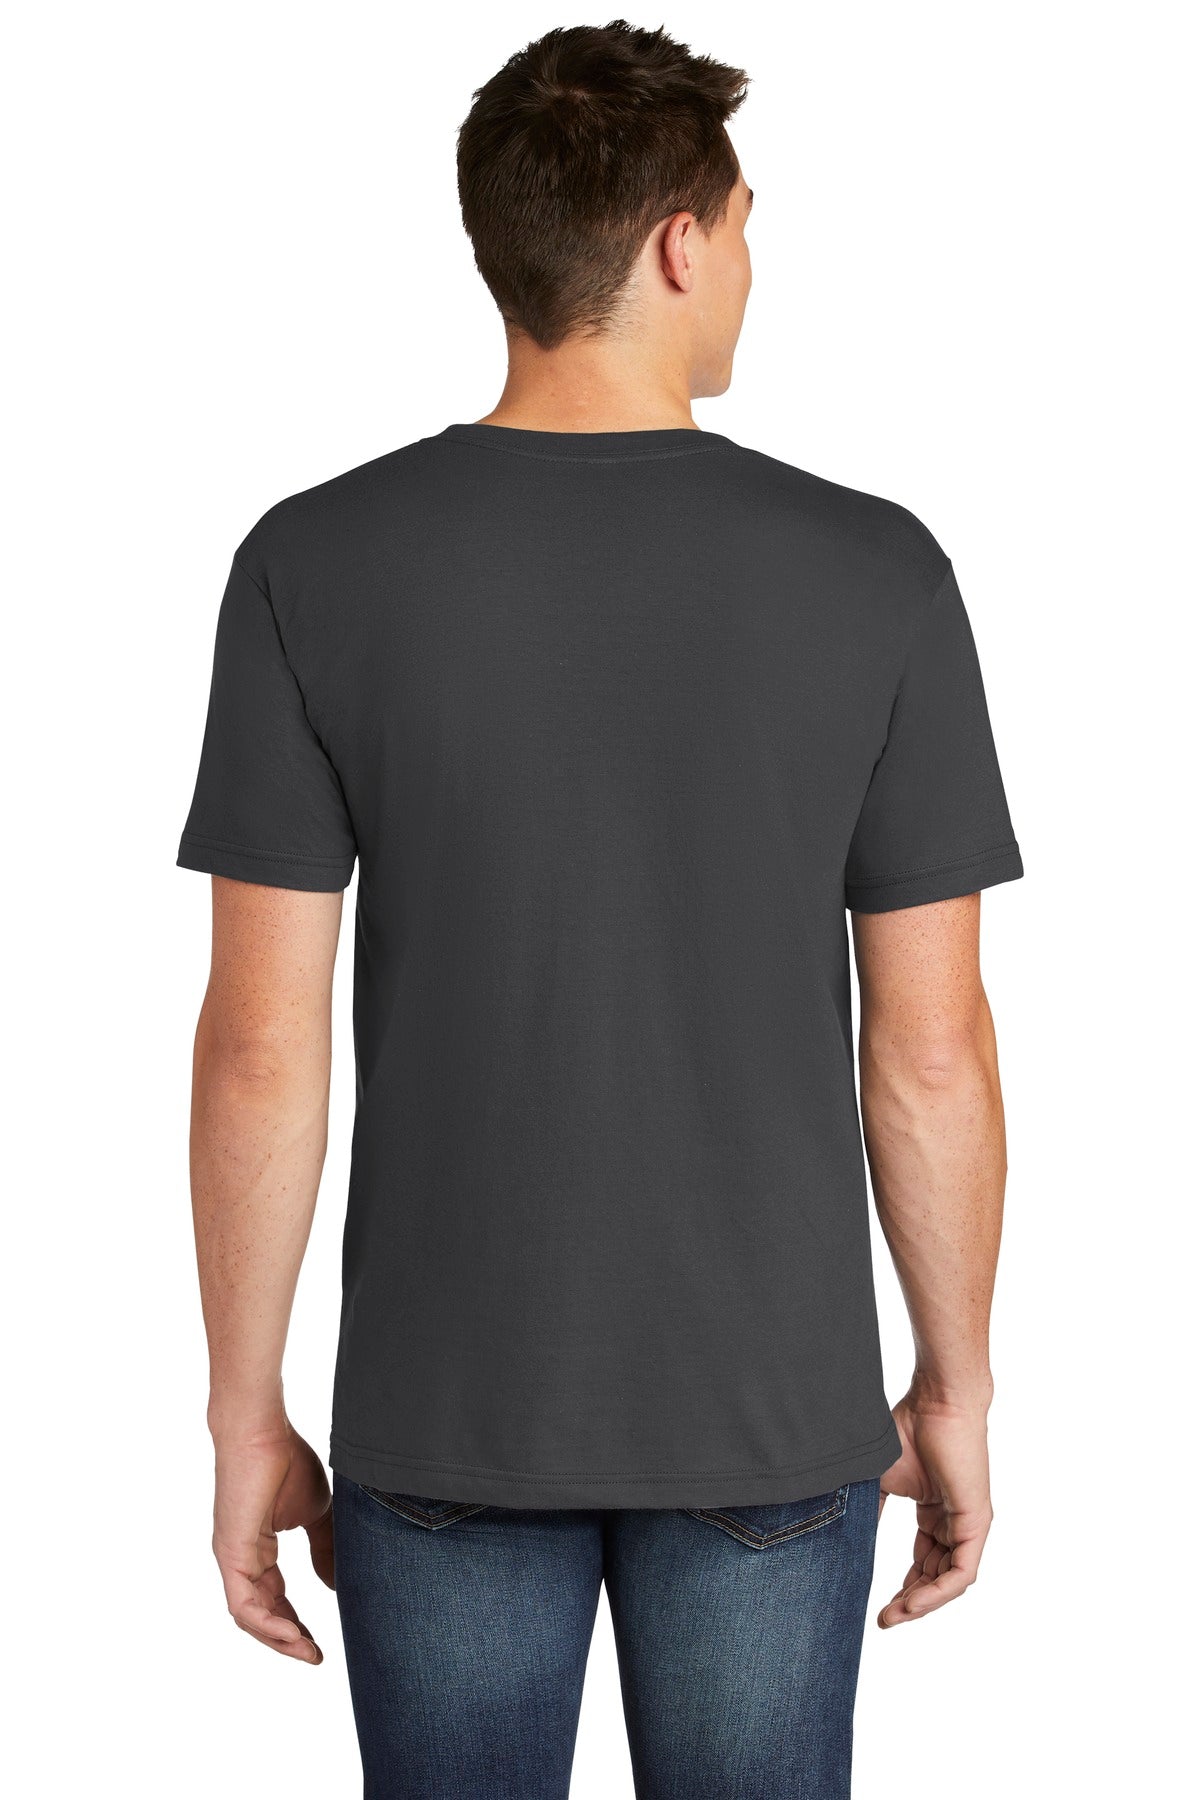 American Apparel ® Fine Jersey V-Neck T-Shirt. 2456W - DFW Impression